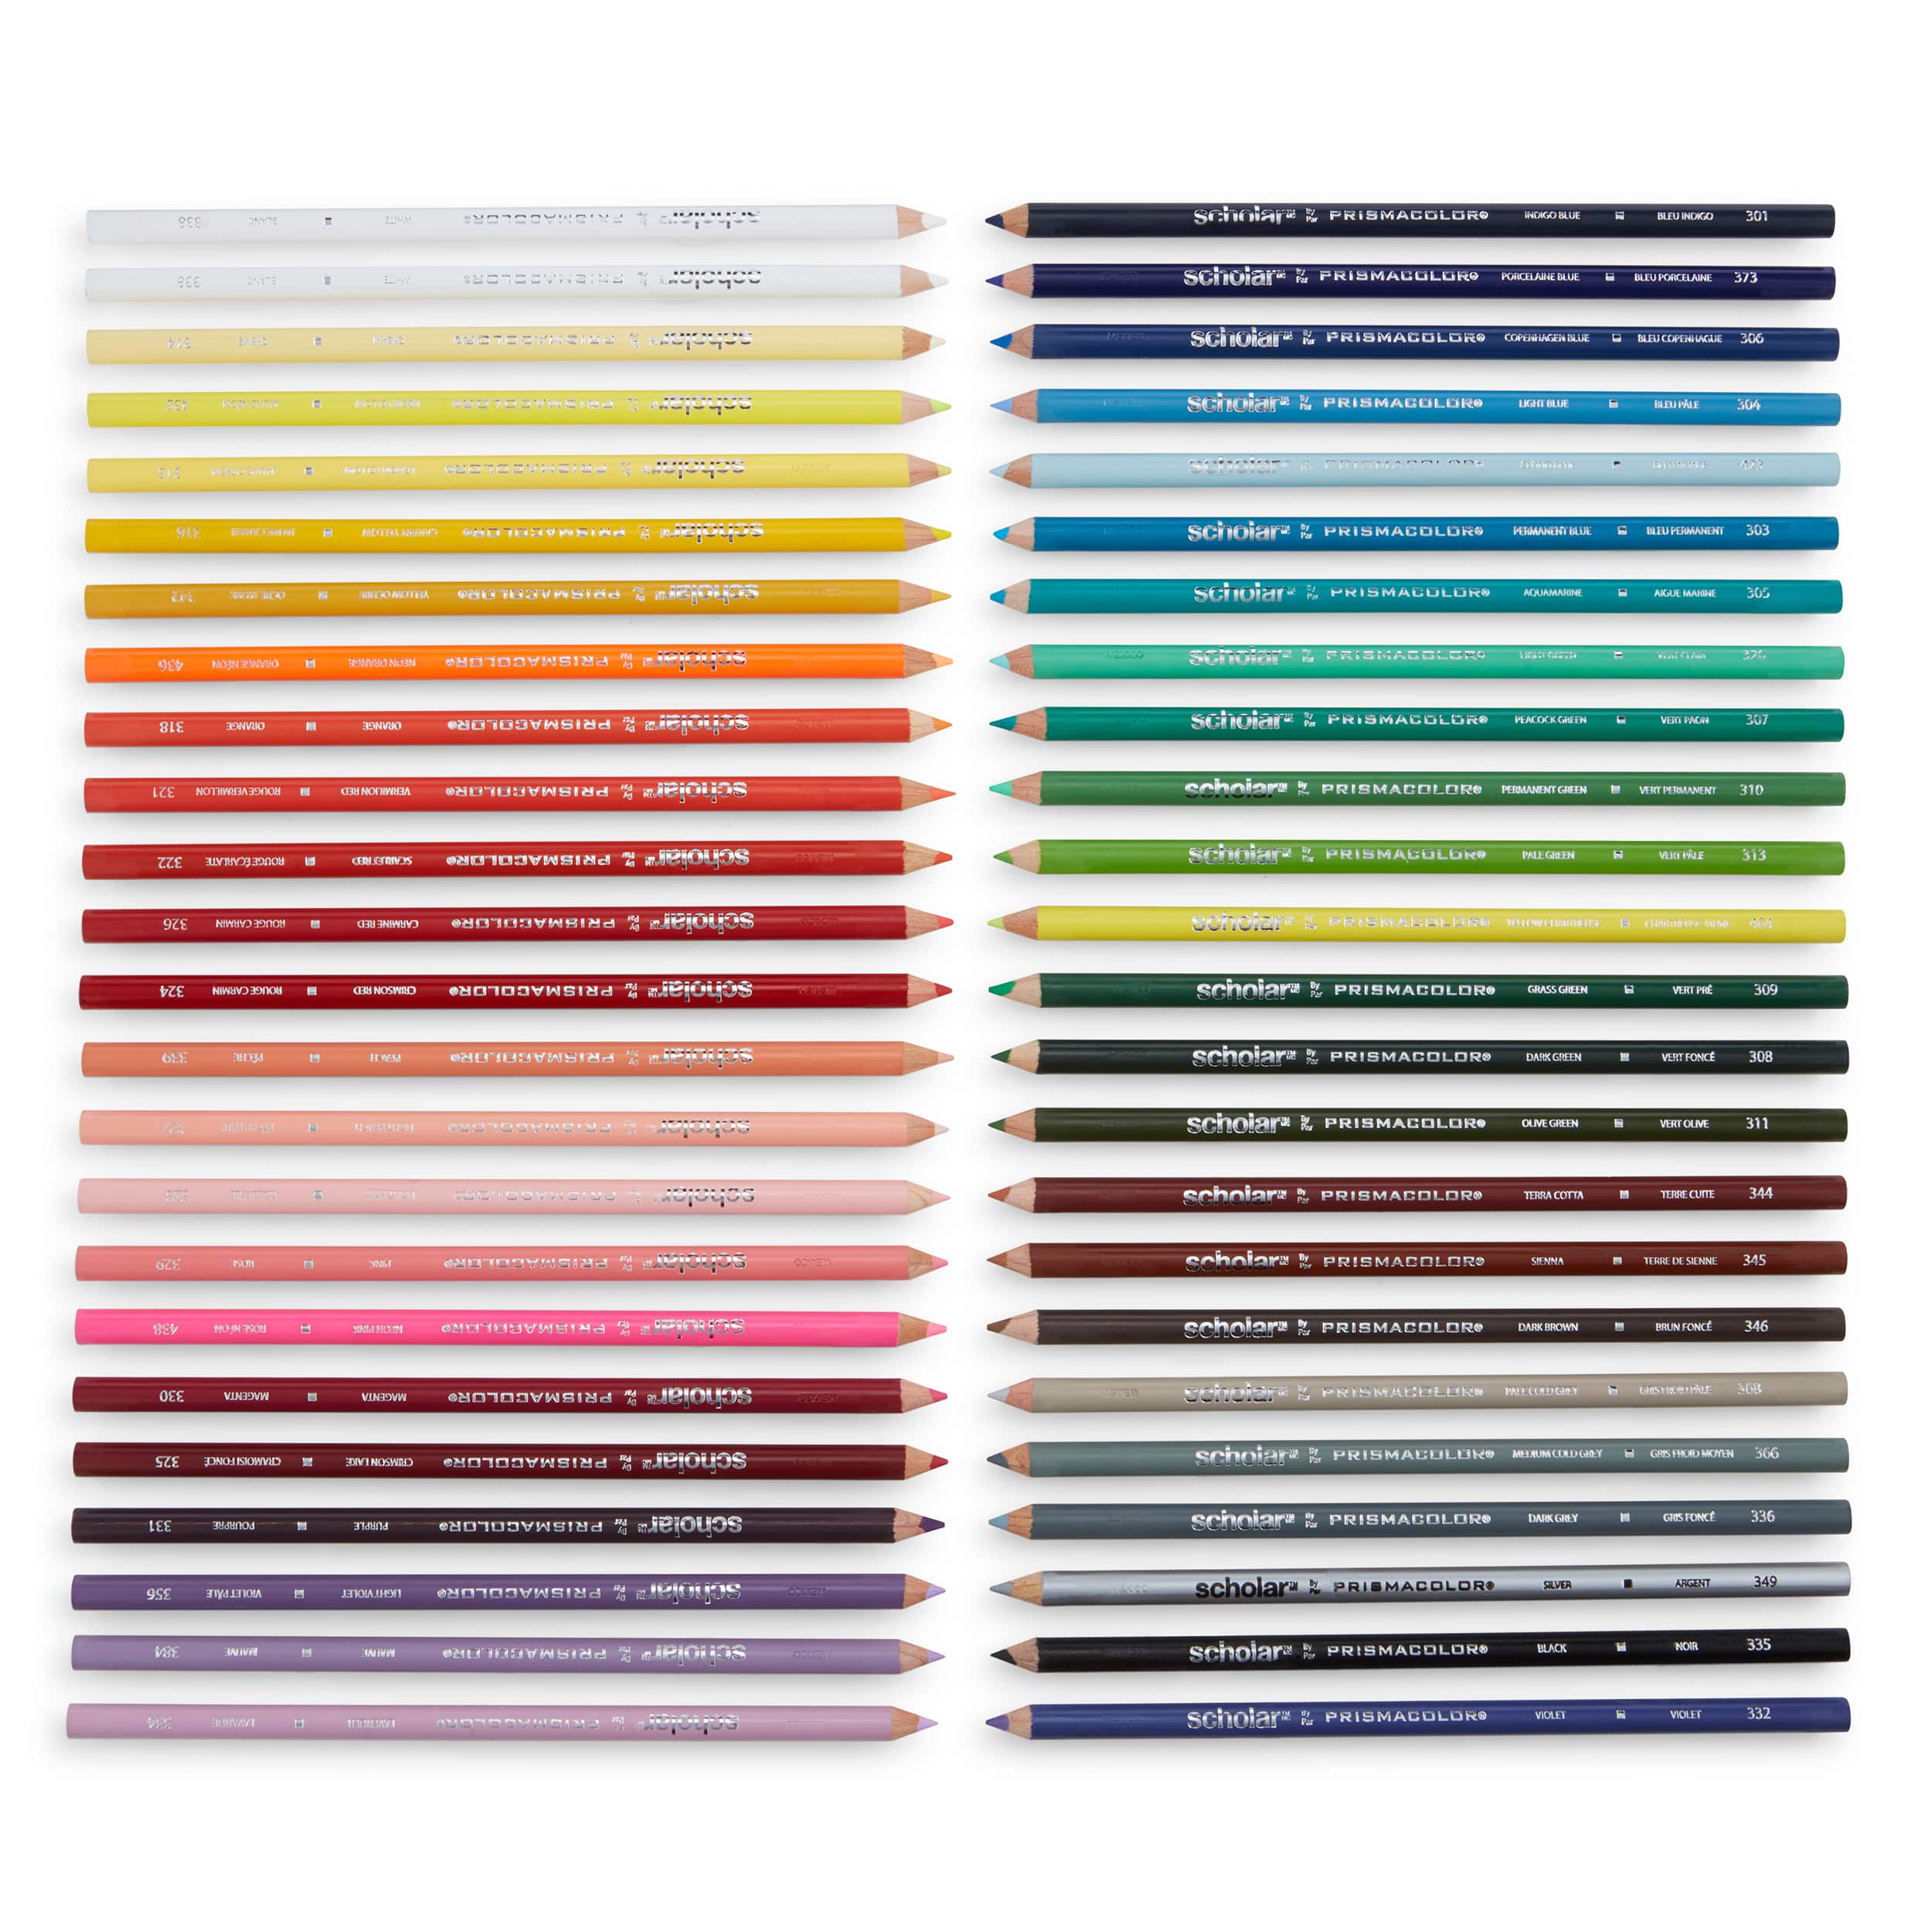 48 Pack Scholar Colored Pencils 